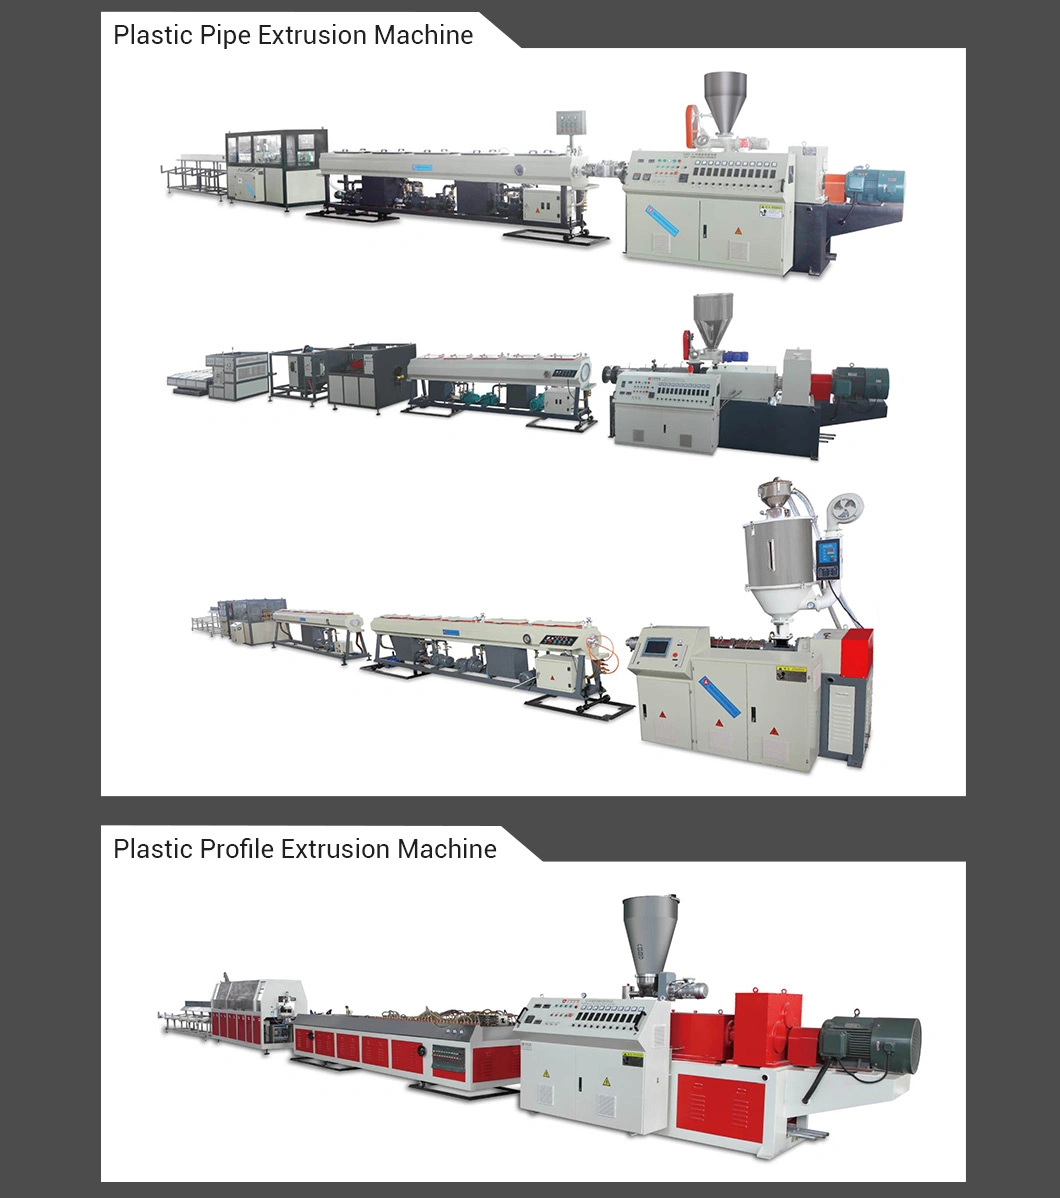 Yatong PP PE Scraps Recycling Plastic Pelletizing Line / PE PP Graunlating Machine / Plastic Recycling Machine